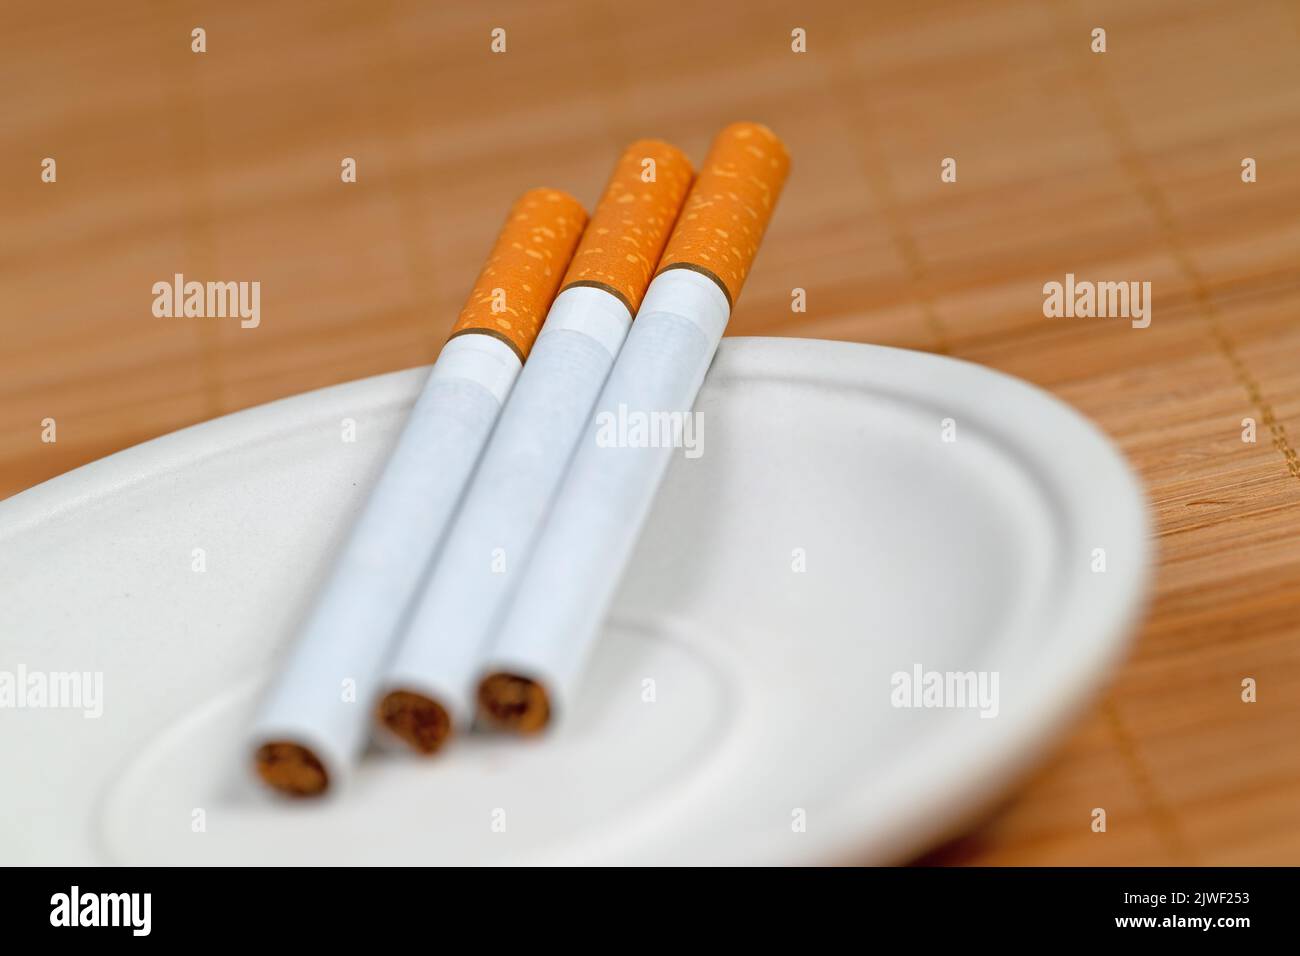 Filter cigarettes in a closeup Stock Photo